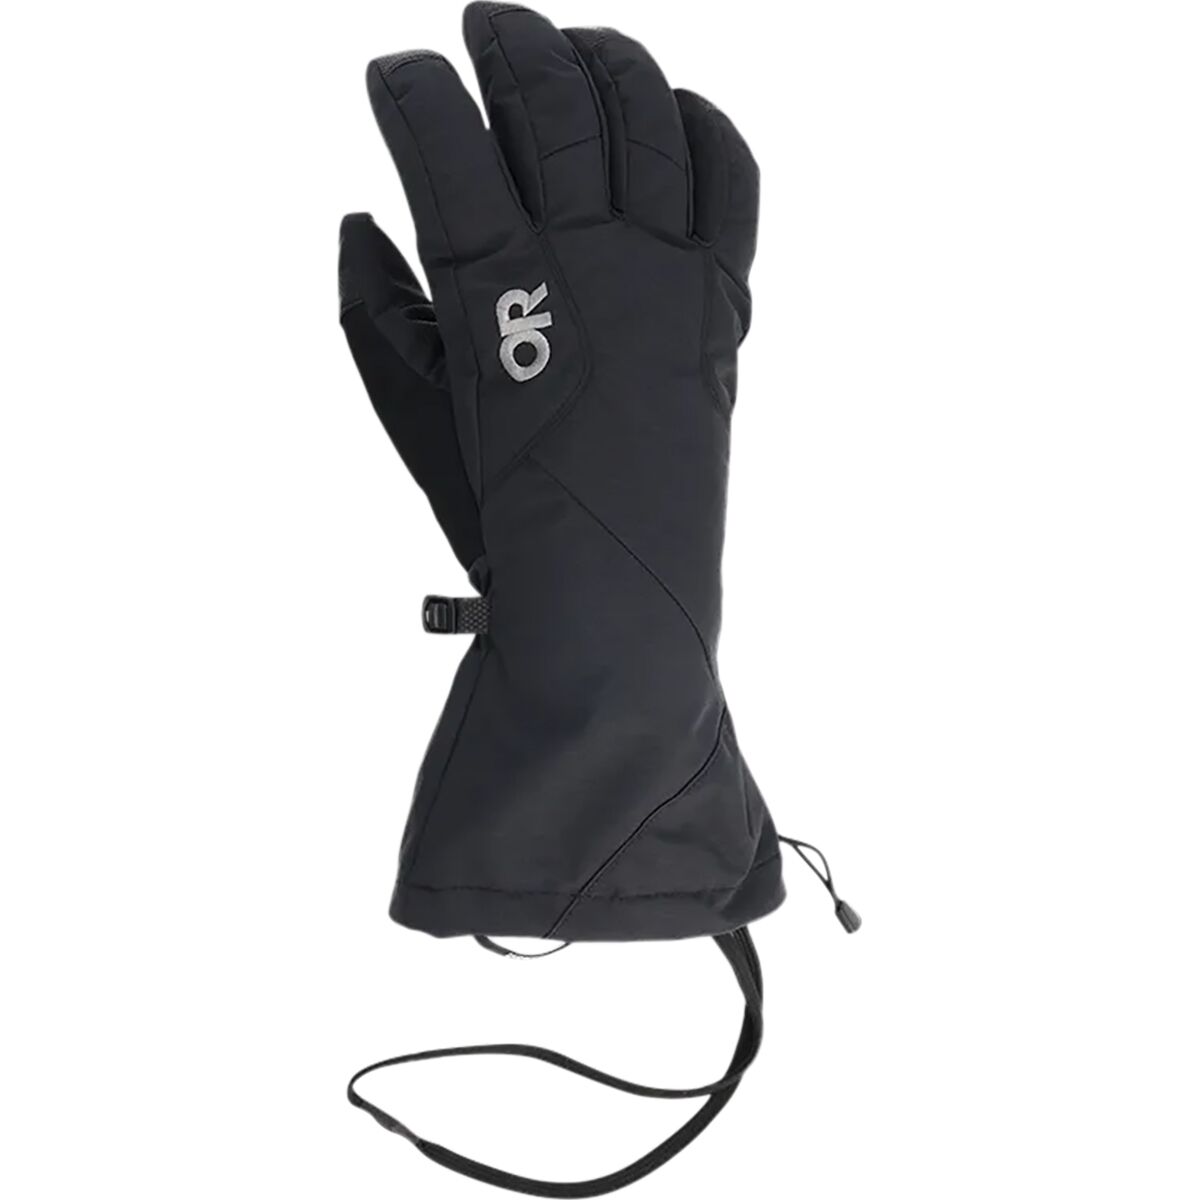 Outdoor Research Adrenaline 3-in-1 Glove